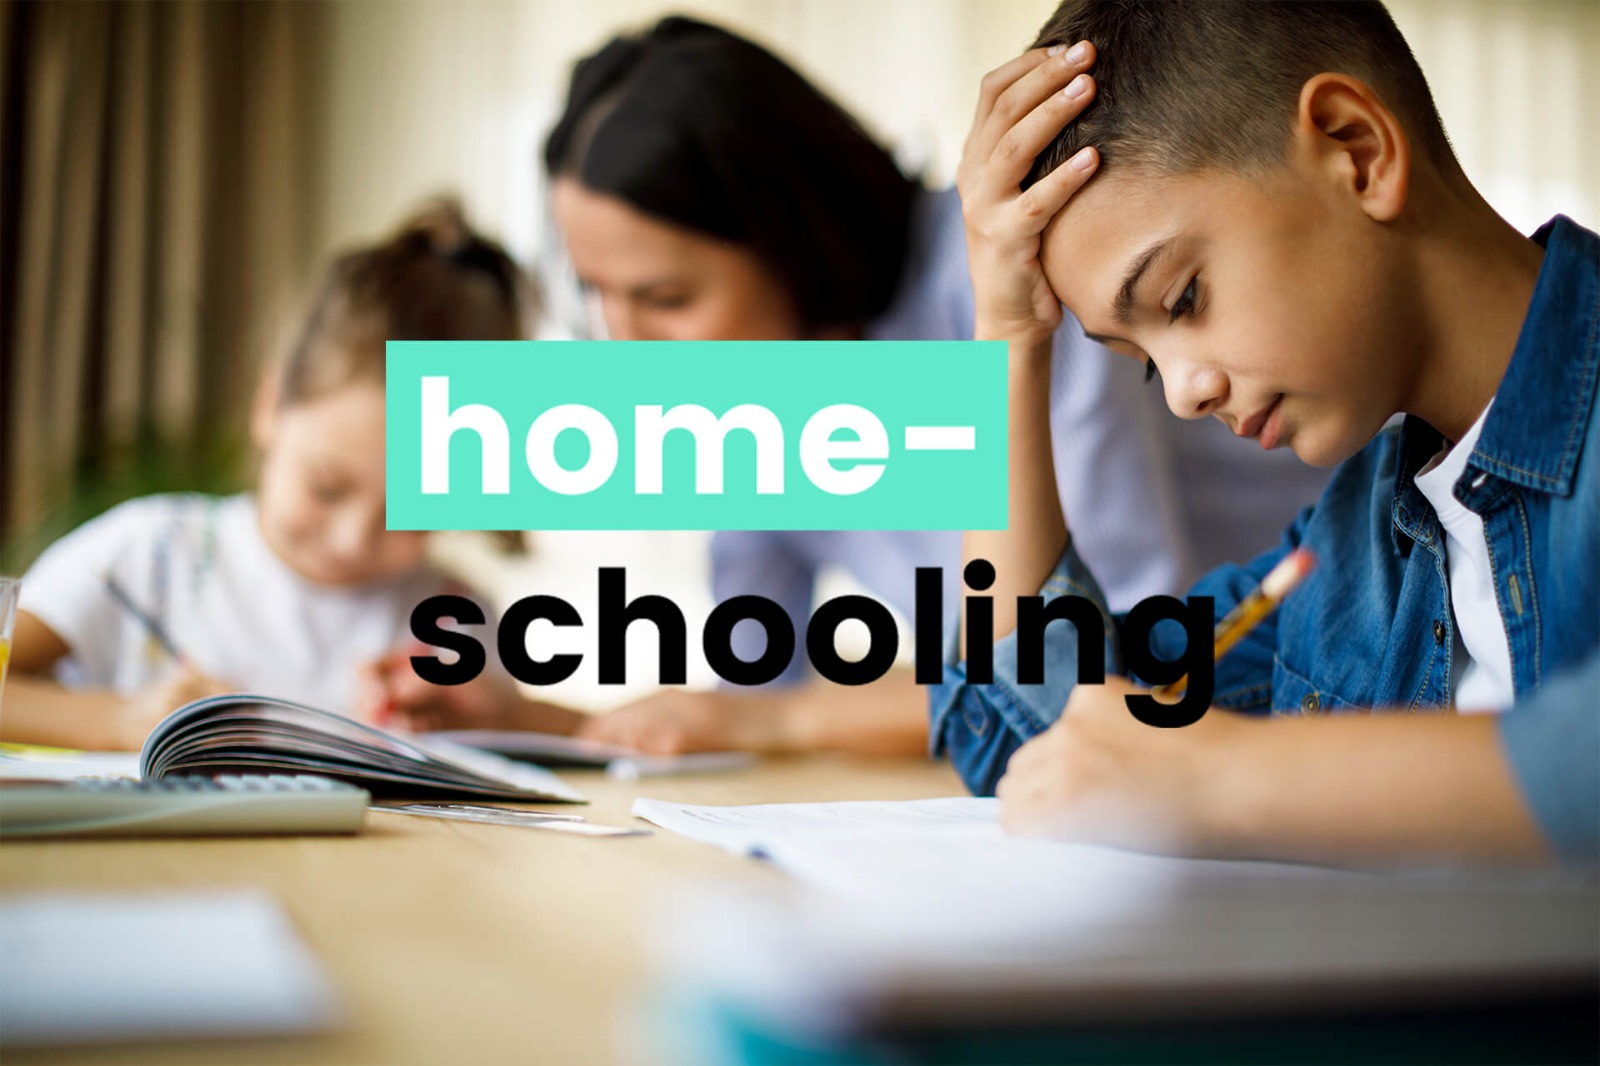 Homeschooling-ul este neconstituțional